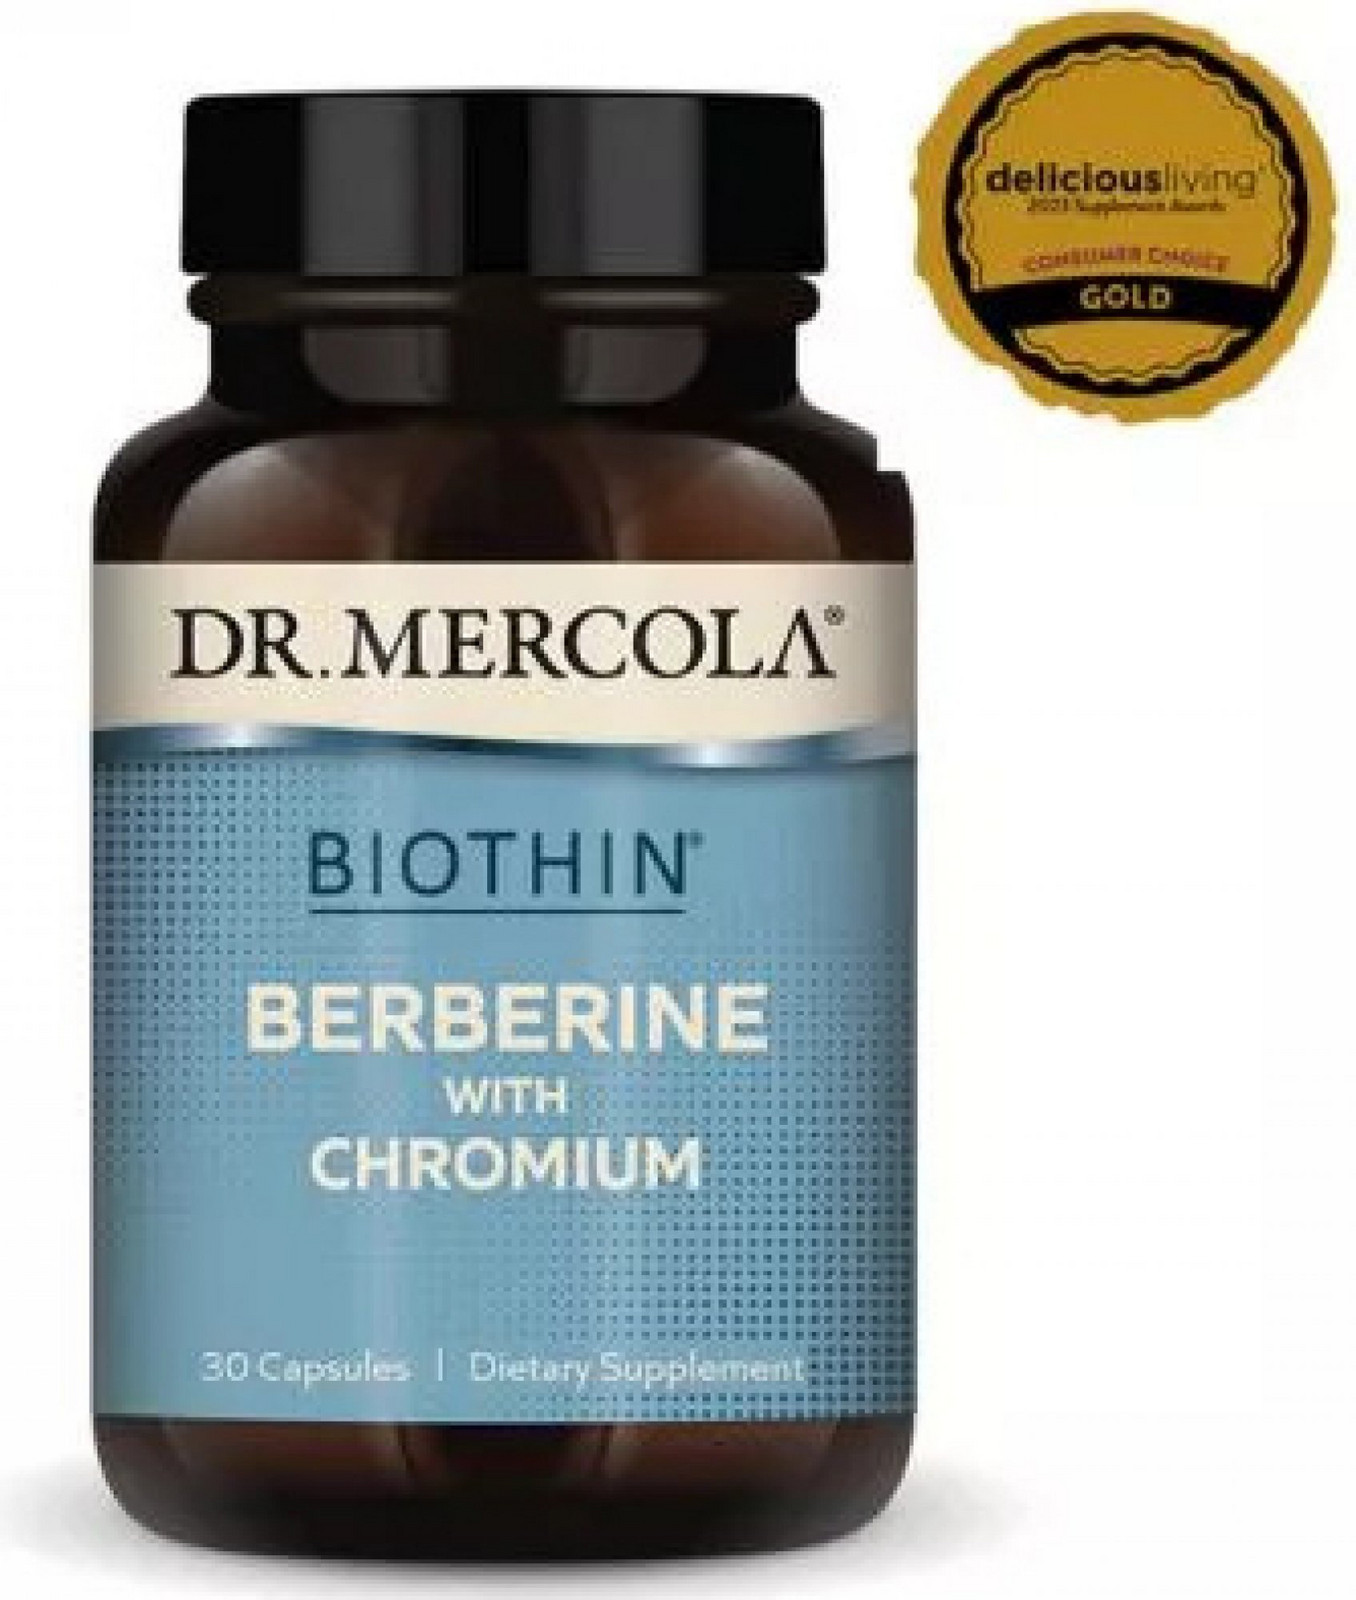 Dr. Mercola EXP 06.2024 Biothin Berberine s Chrómem, 30 kapslí